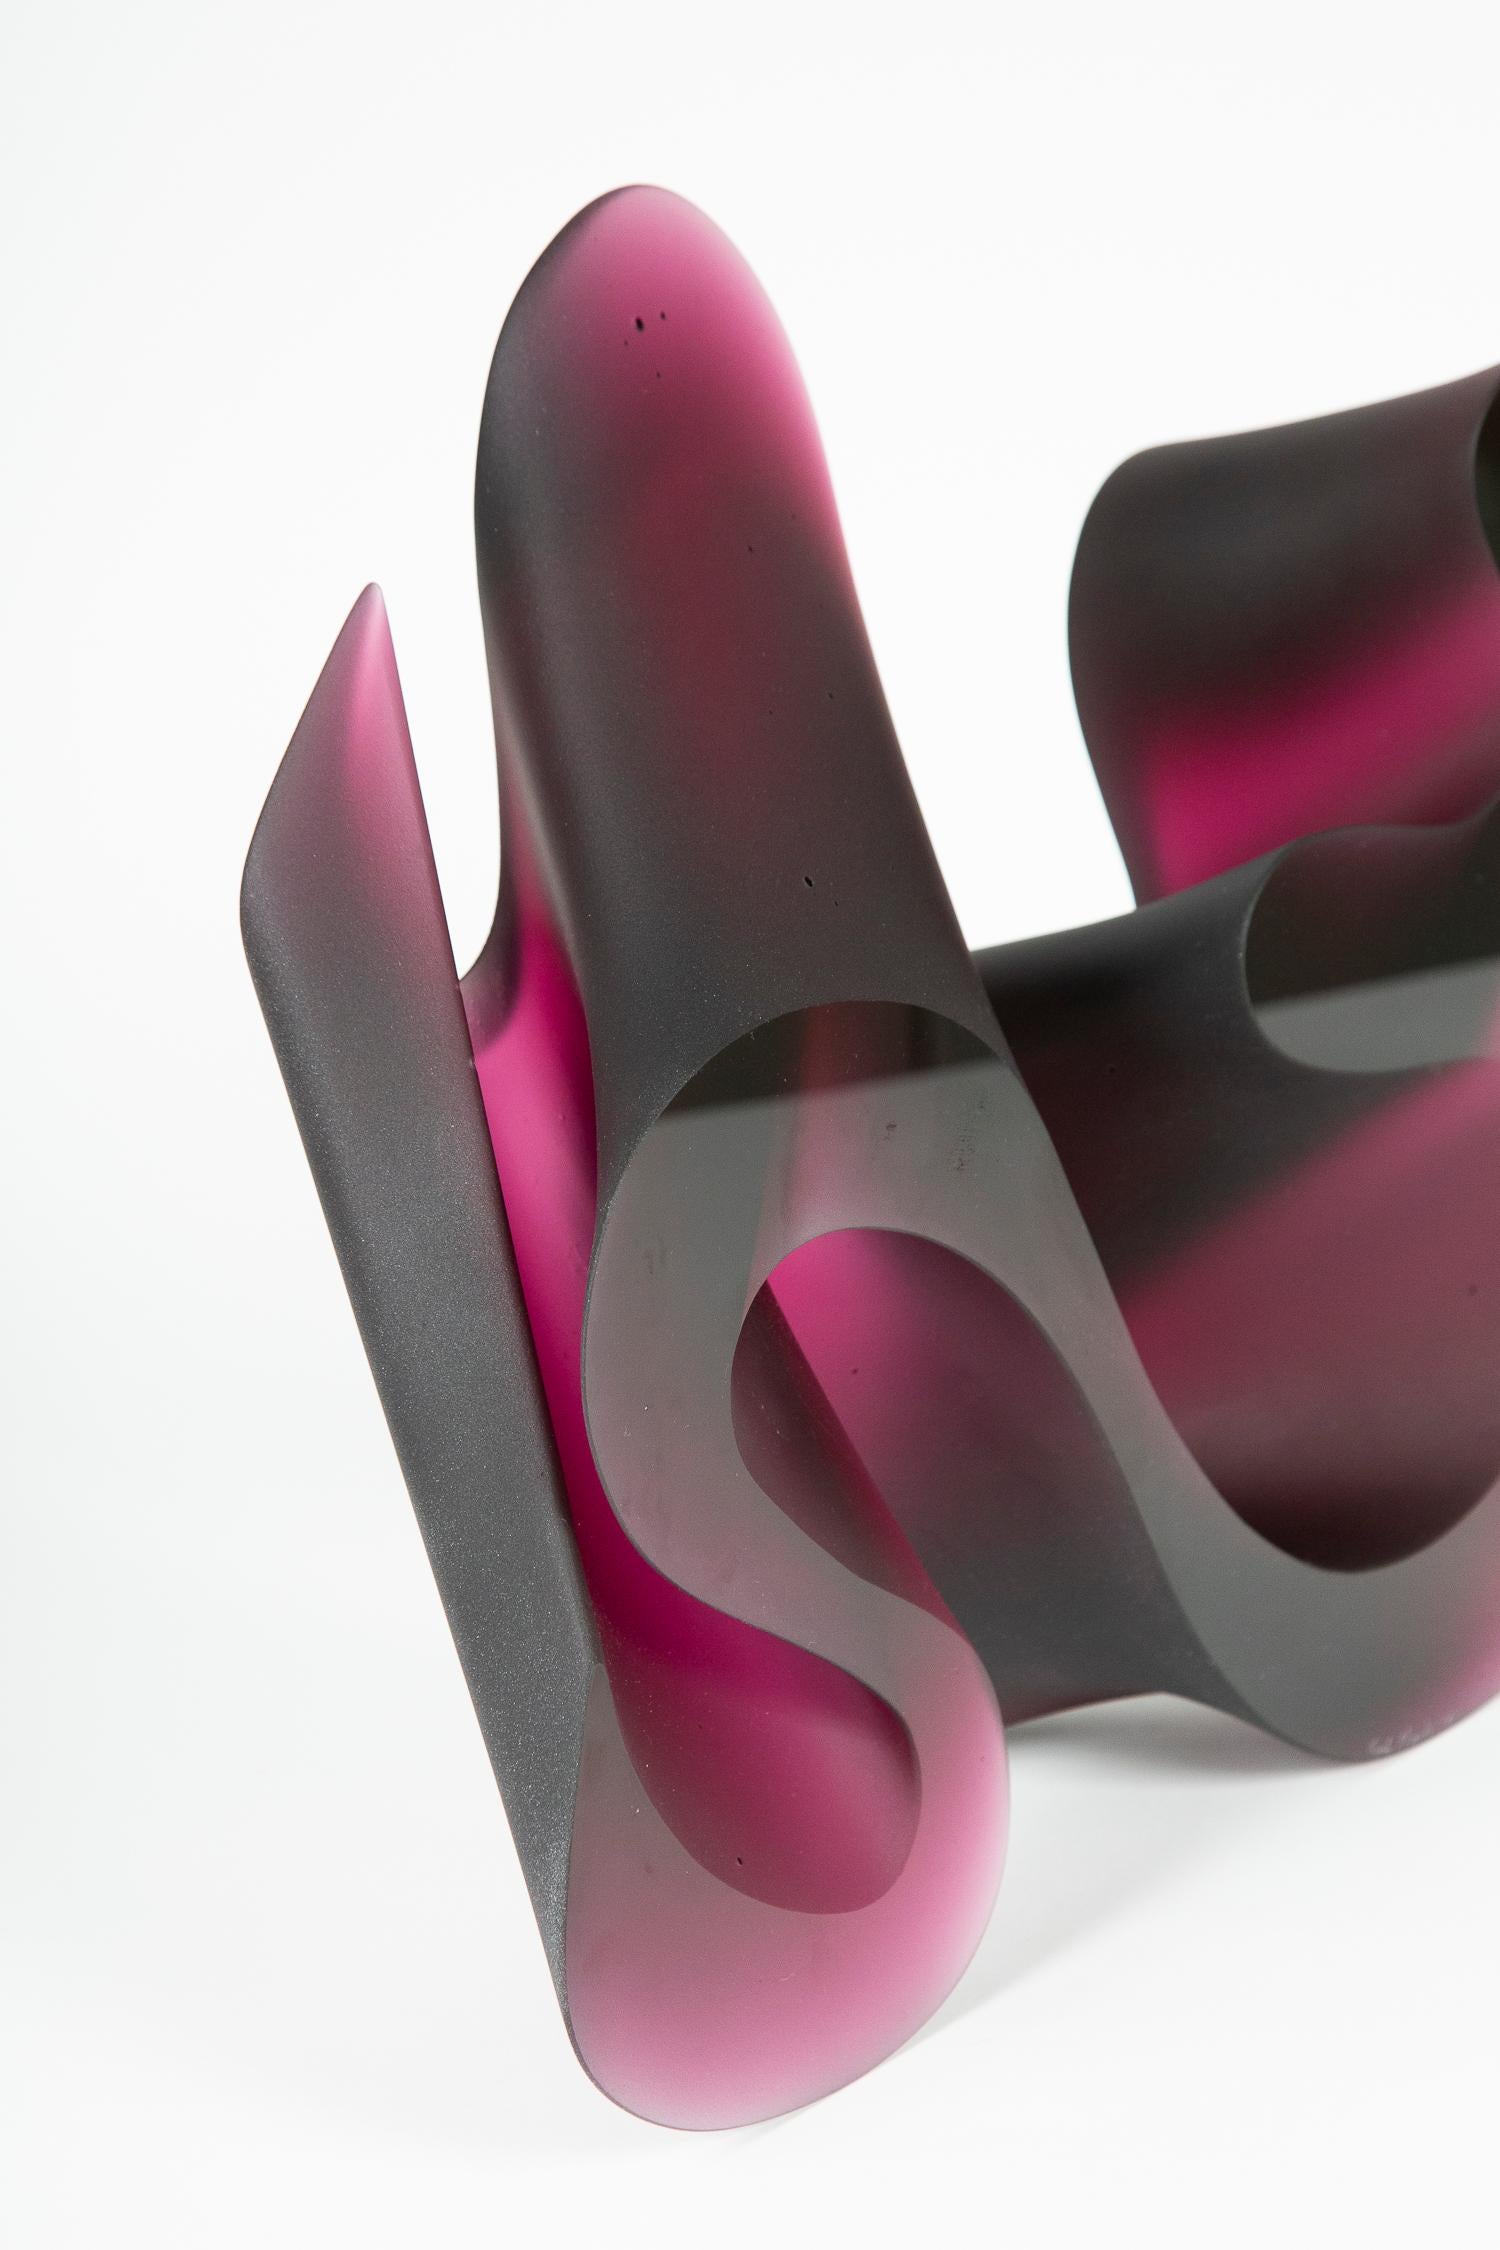 Big Pink Line Unique Glass Sculpture by Karin Mørch 1